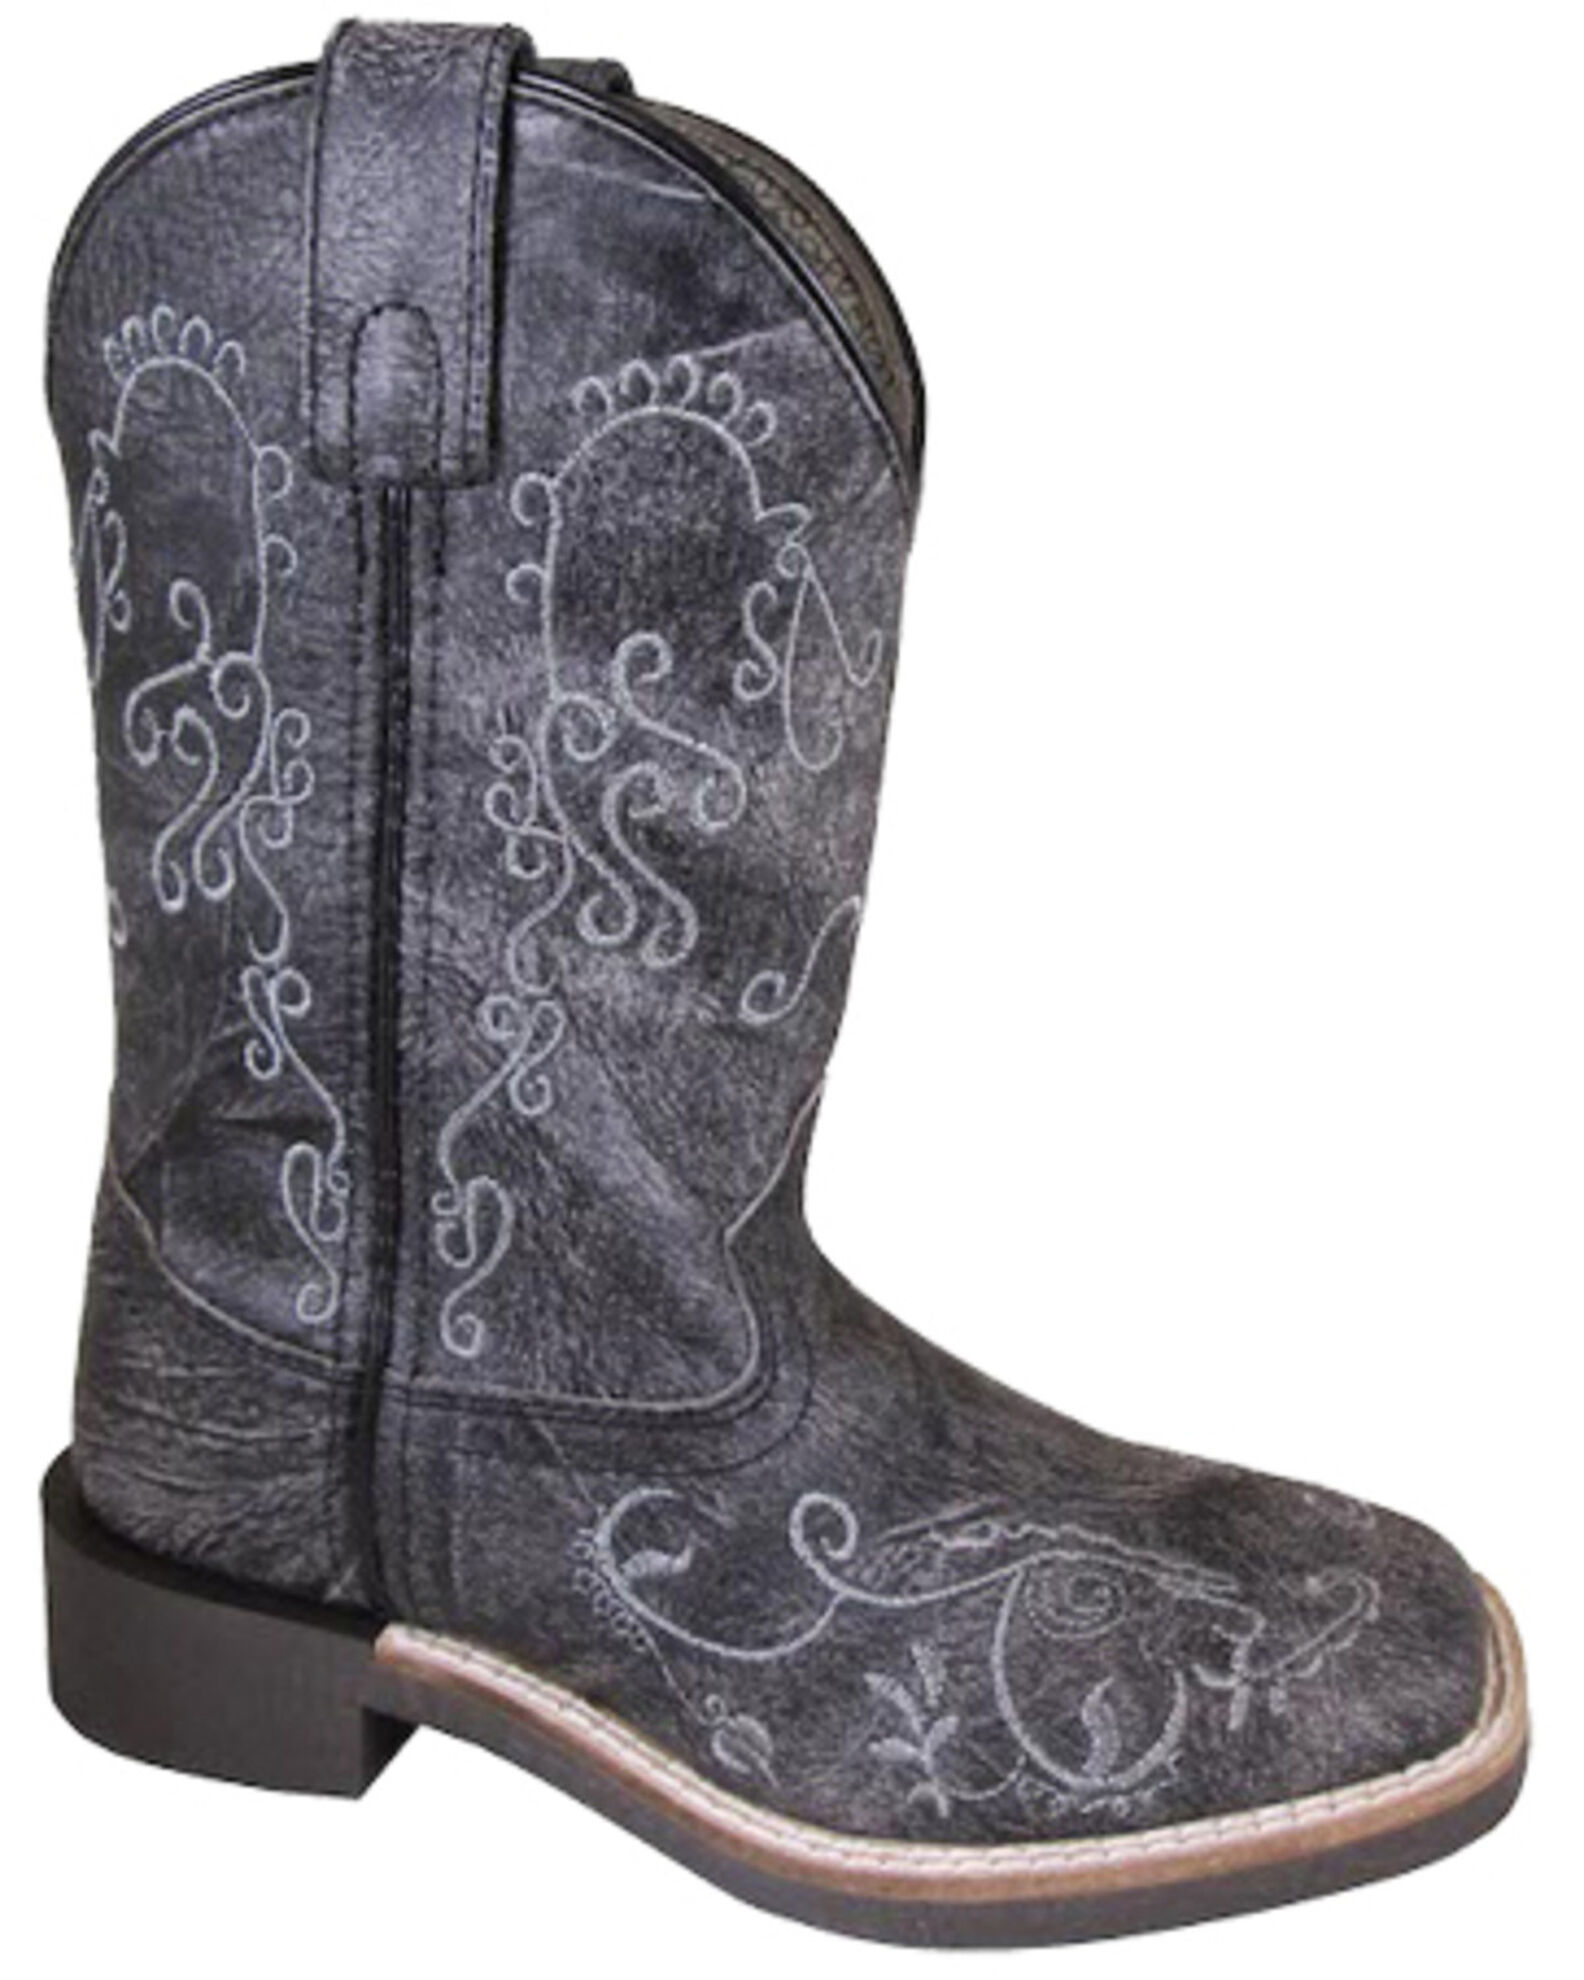 Smoky Mountain Boots - Boot Barn